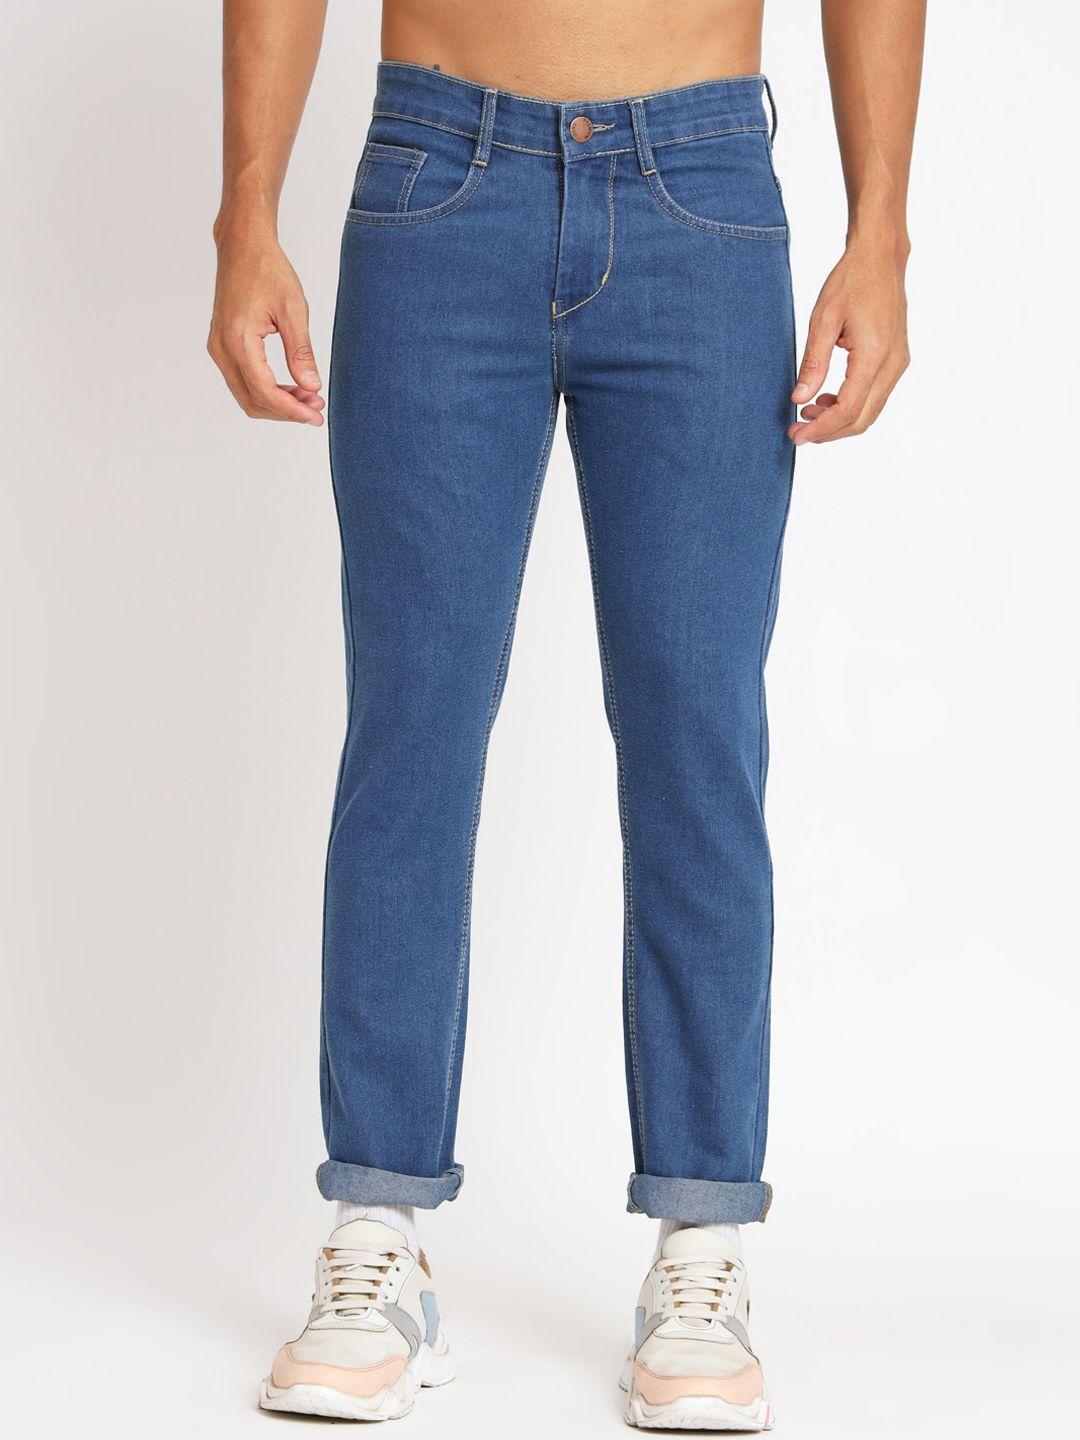 ragzo-men-slim-fit-stretchable-clean-look-jeans